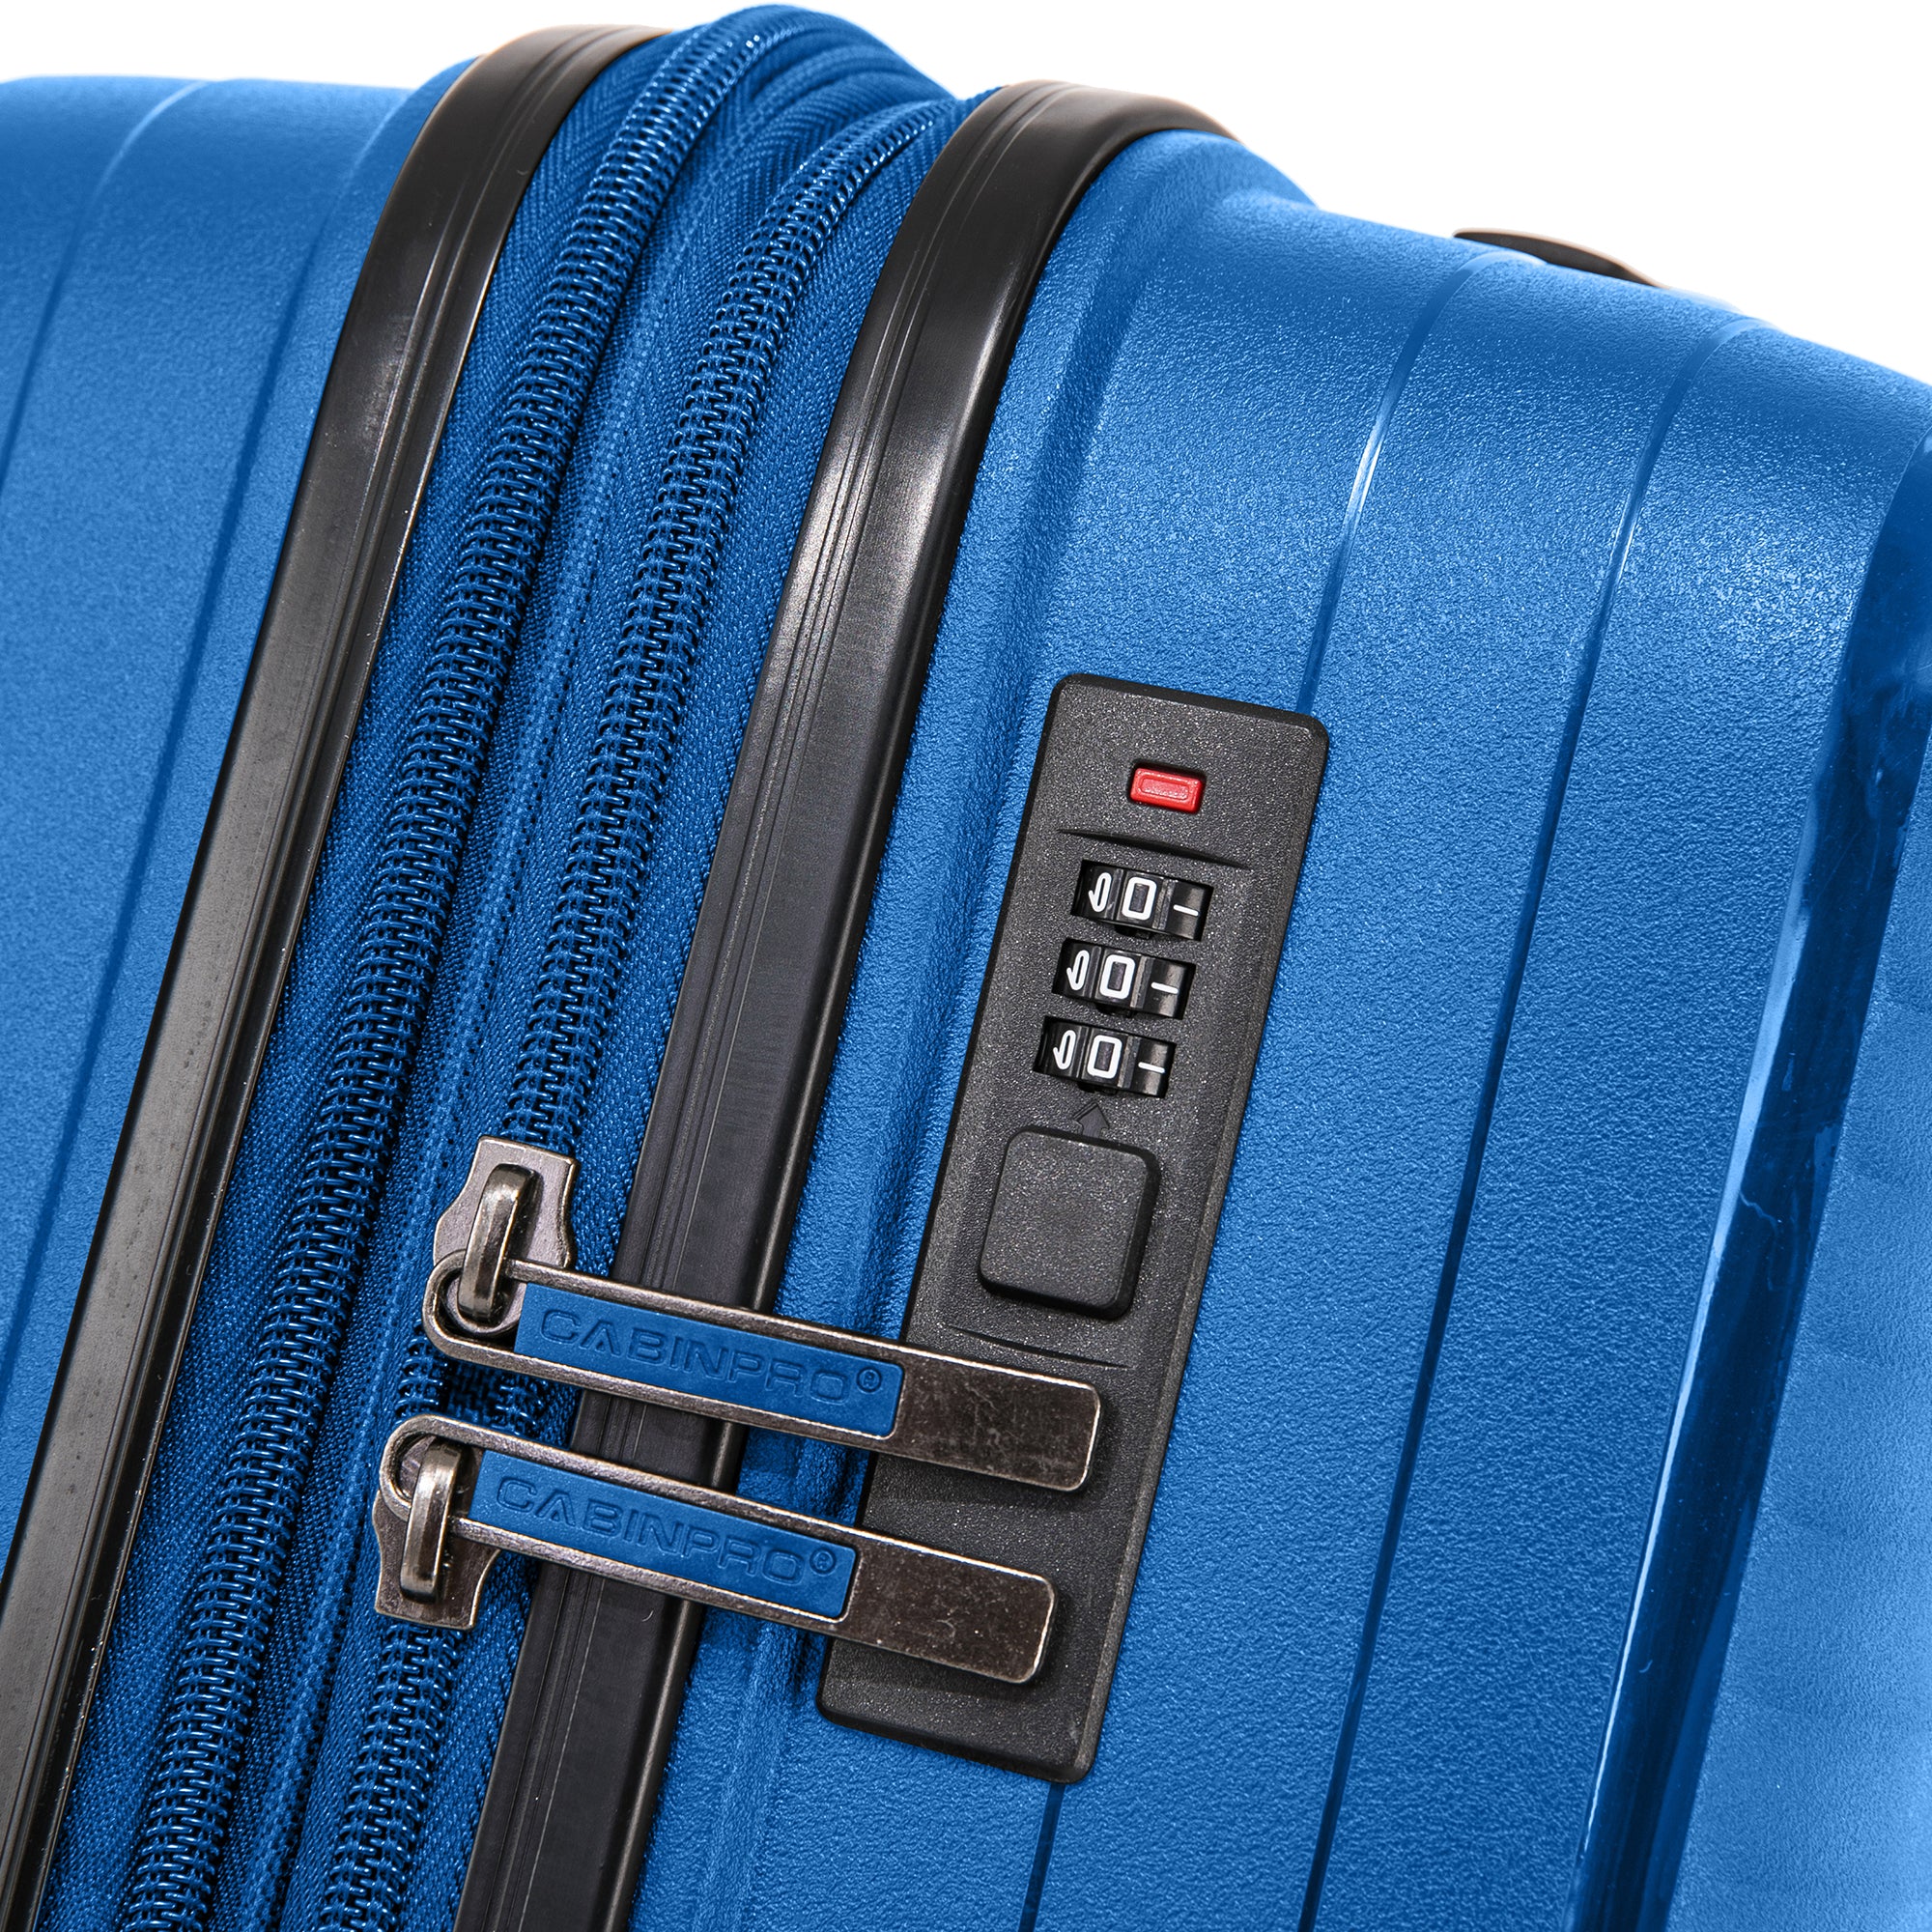 Cabin luggage #Color_Sapphire Blue